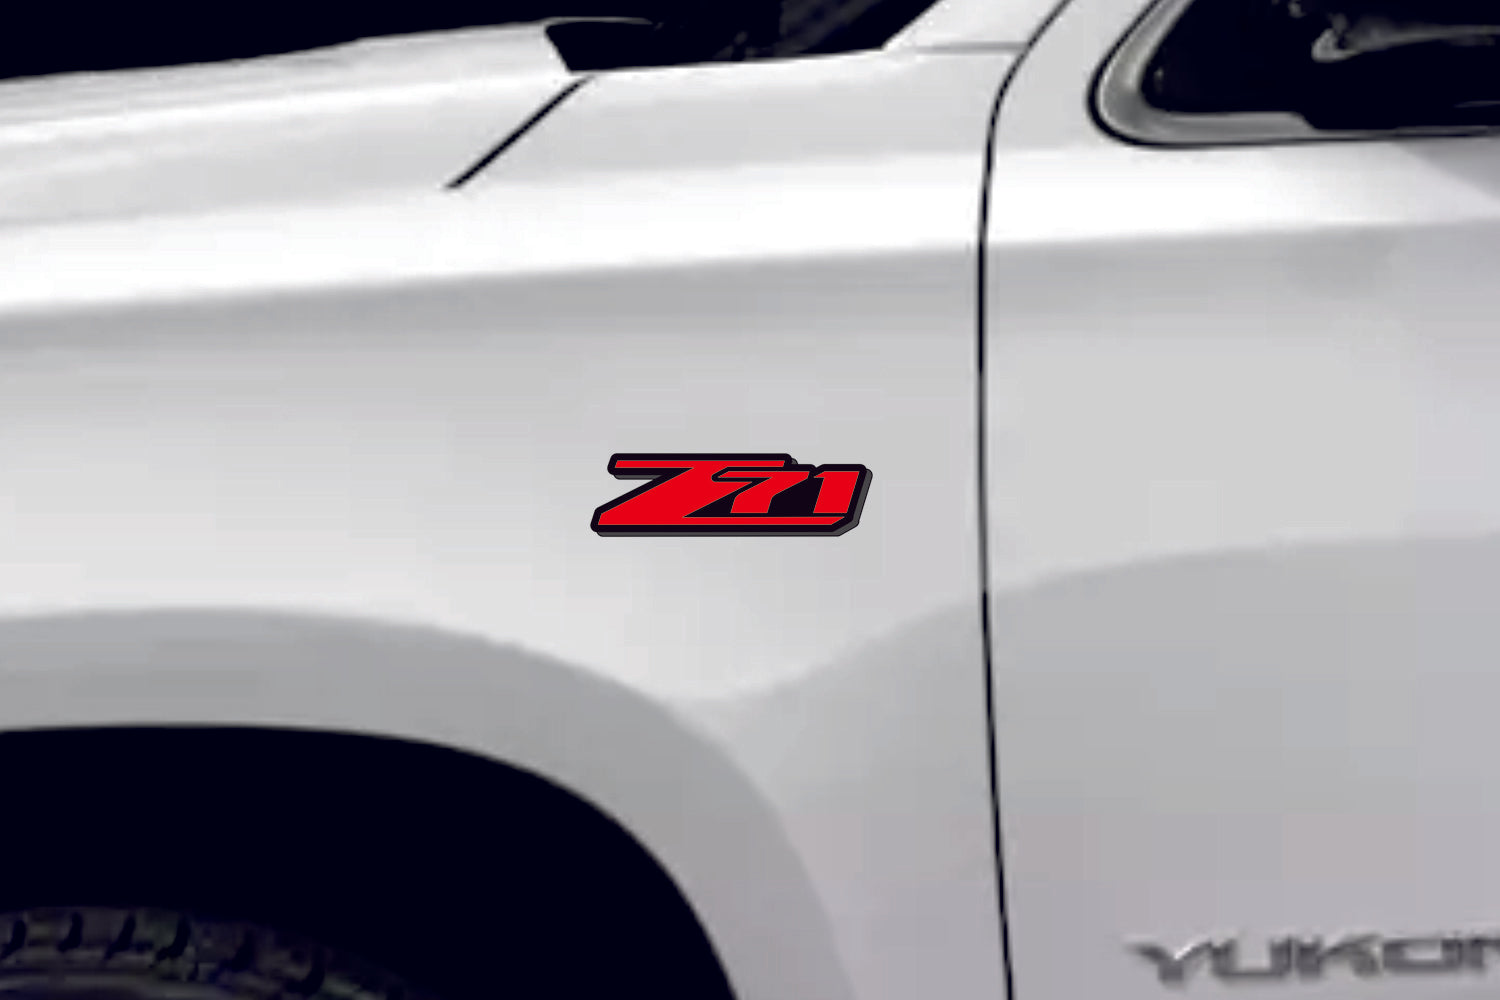 Chevrolet emblem for fenders with Z71 logo